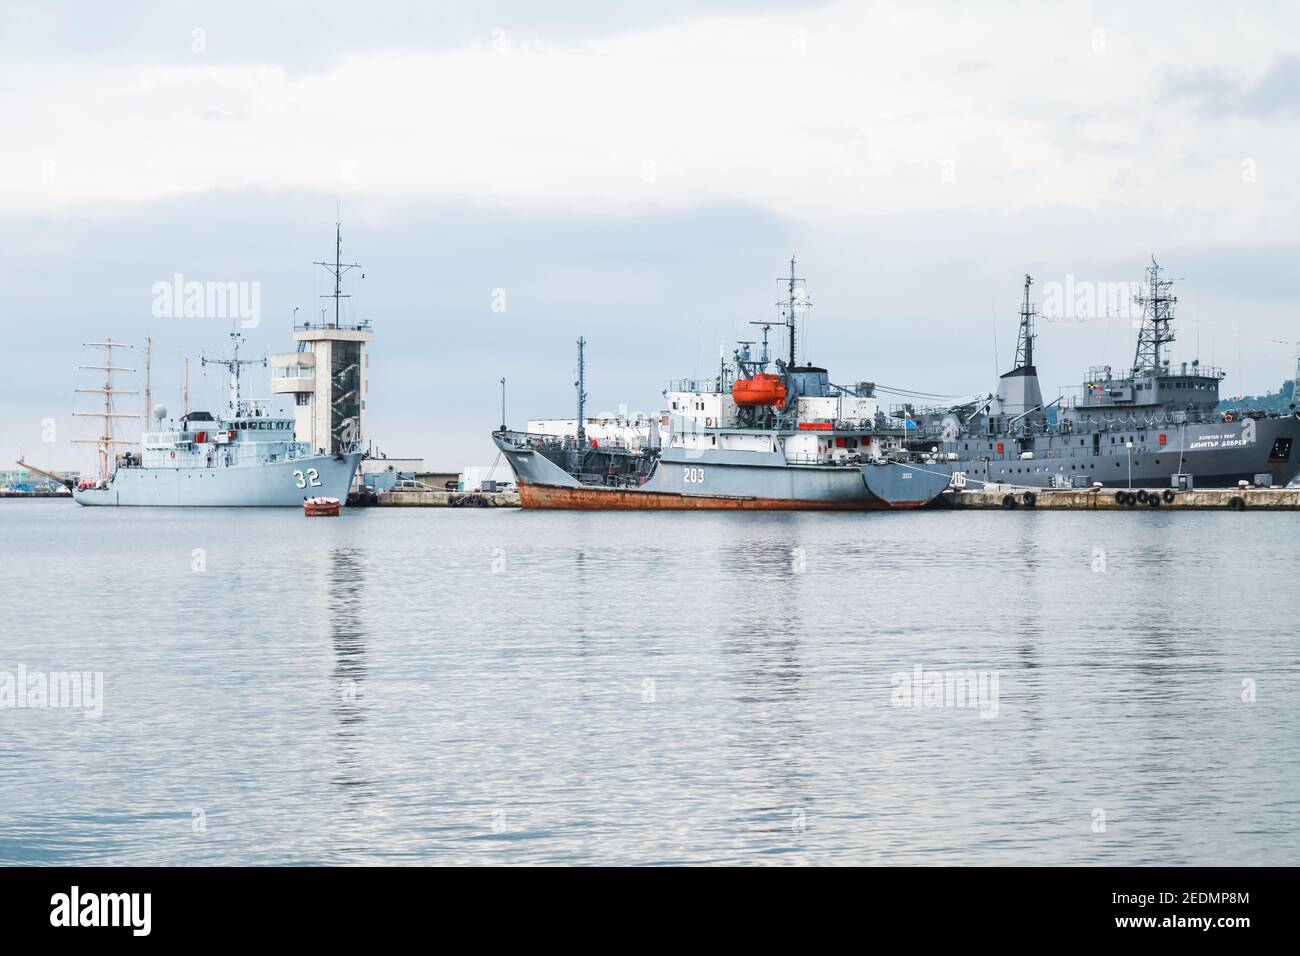 Varna, Bulgaria - July 16, 2014: Bunkering vessel Balchik 203 and Tripartite-class minehunter hull number 32 of Bulgarian Navy stand at Varna naval ba Stock Photo